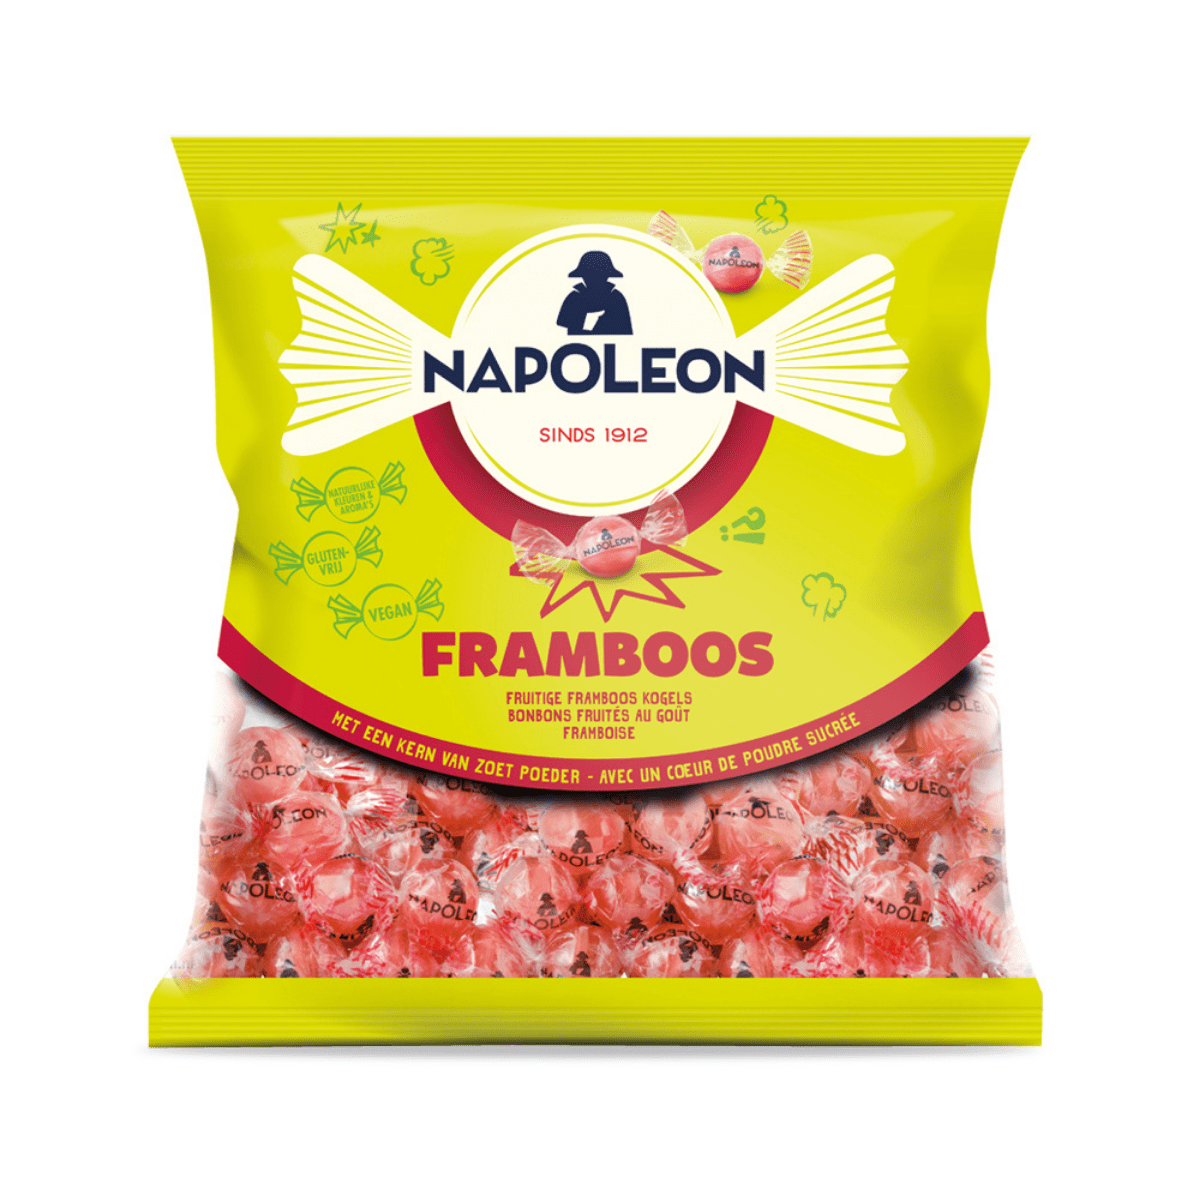 Napoleon Framboos balls 1kg